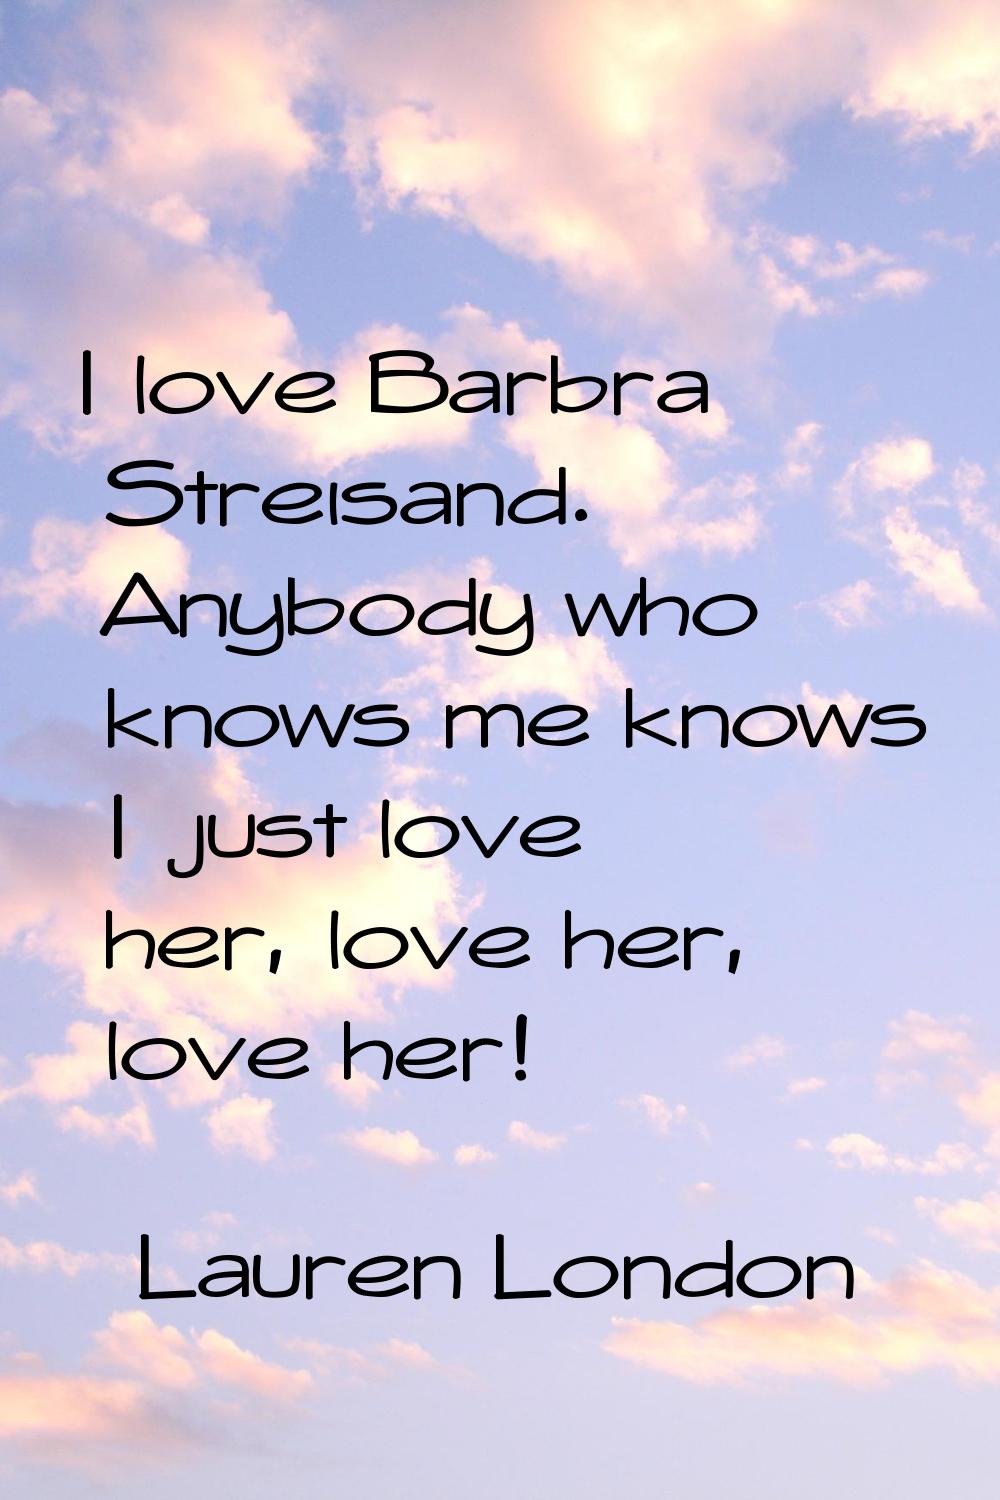 I love Barbra Streisand. Anybody who knows me knows I just love her, love her, love her!